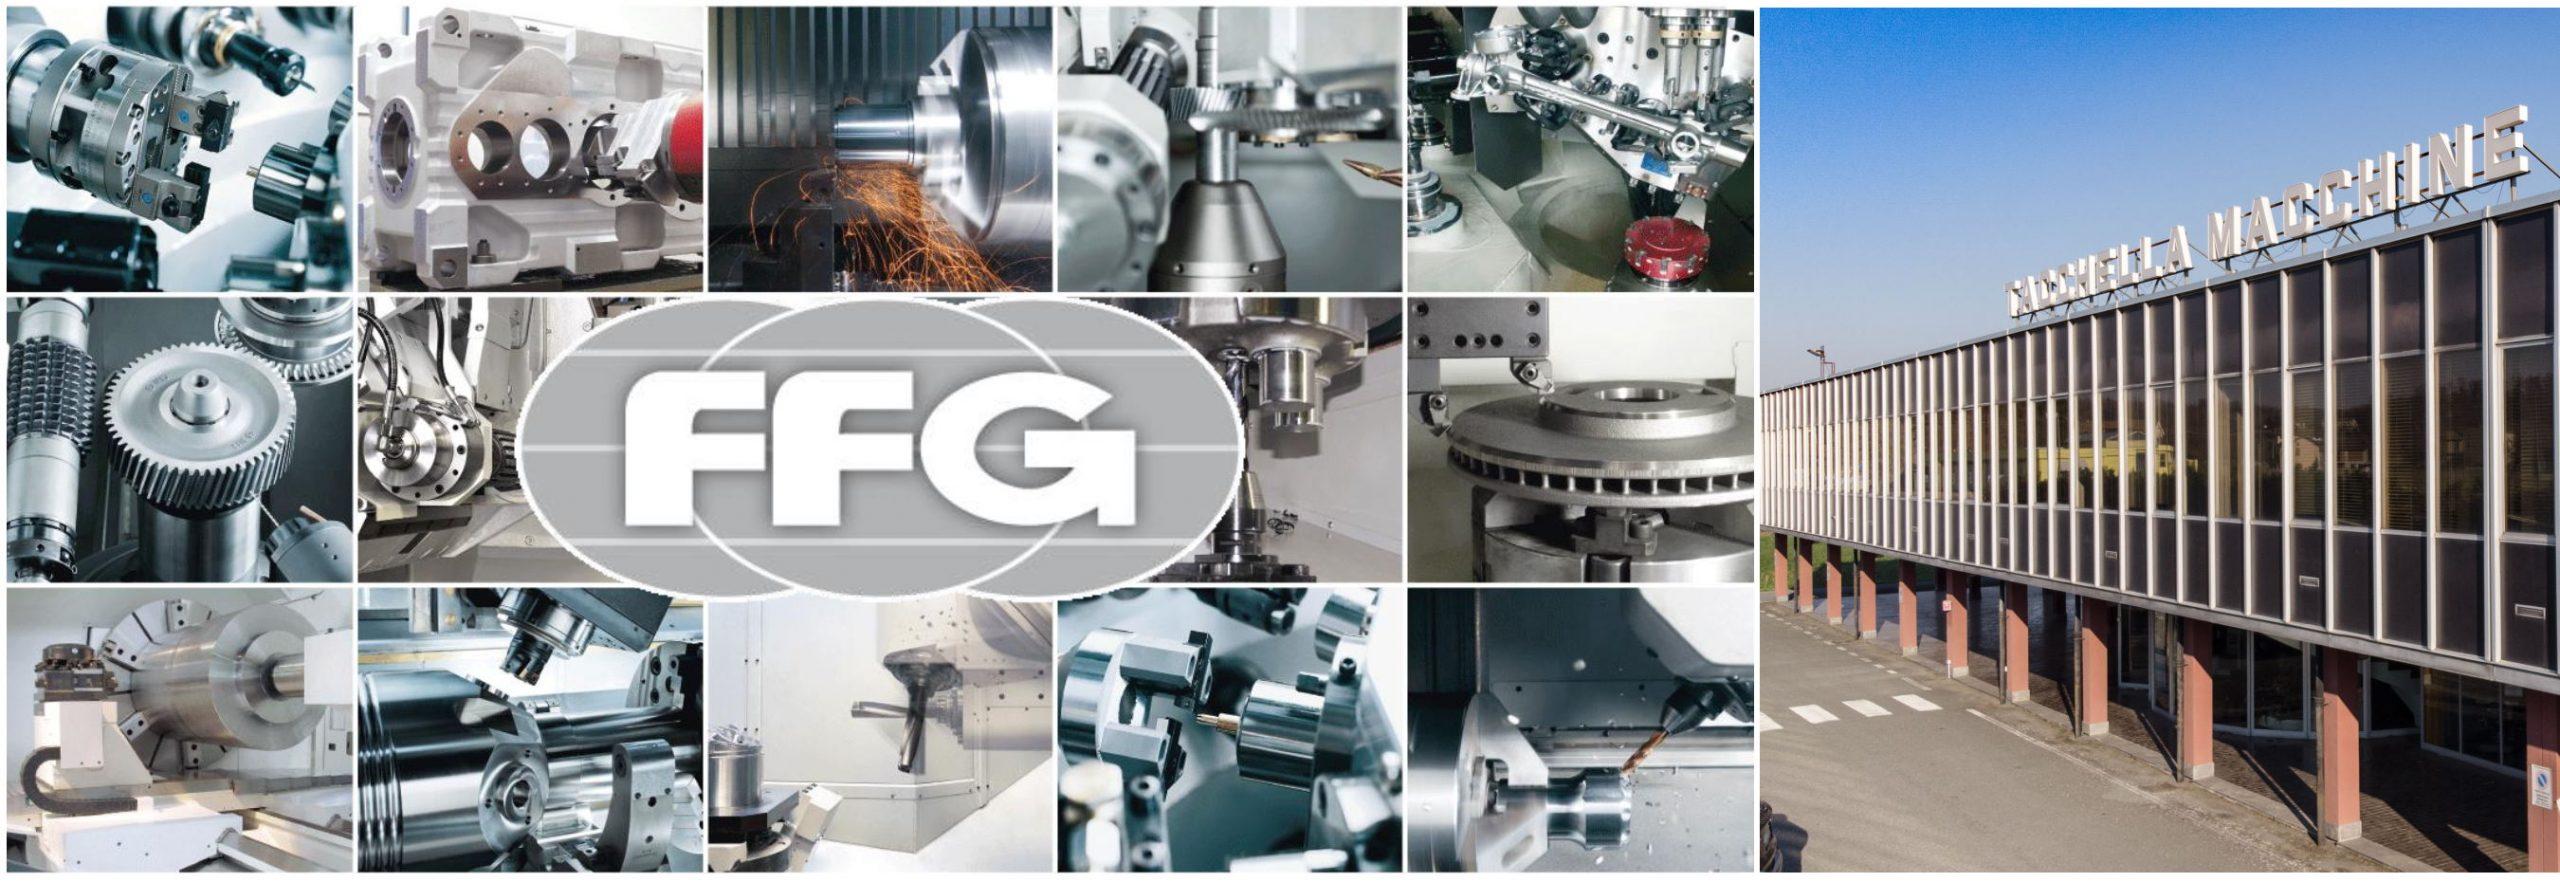 FFG grinding technology